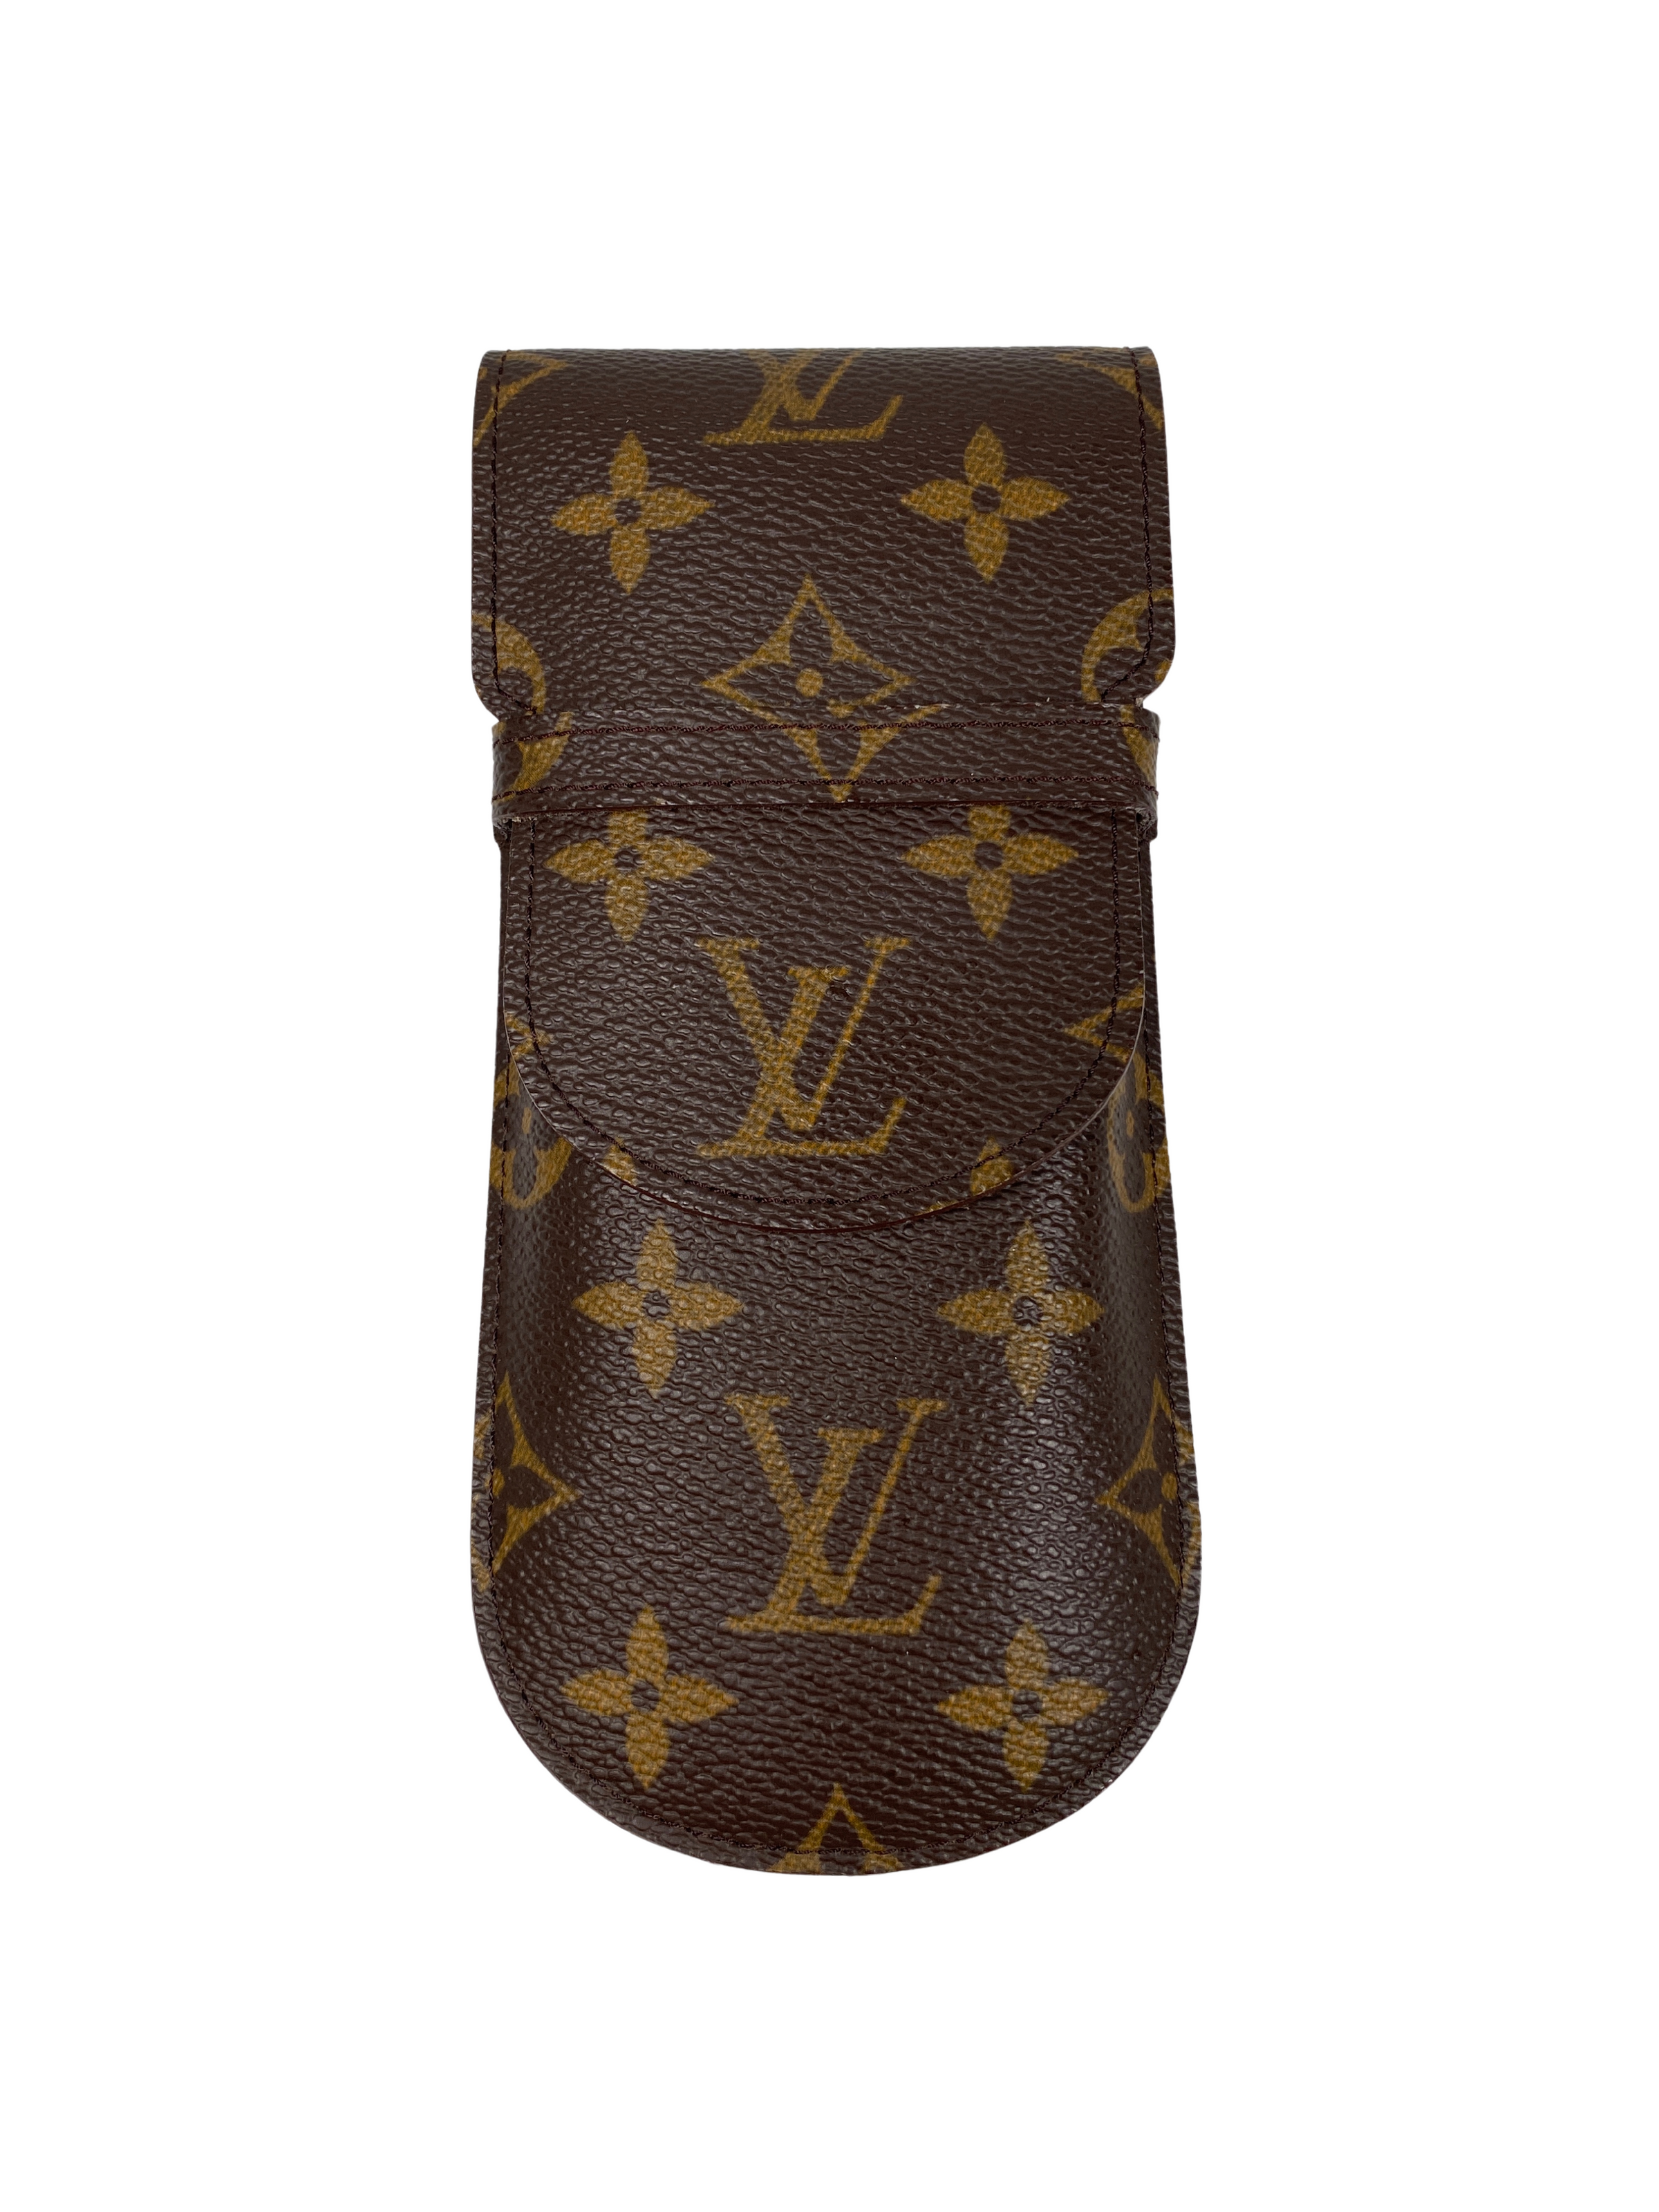 Authentic Louis Vuitton Monogram Etui Lunettes Rabat M62970 Glasses Case  103133